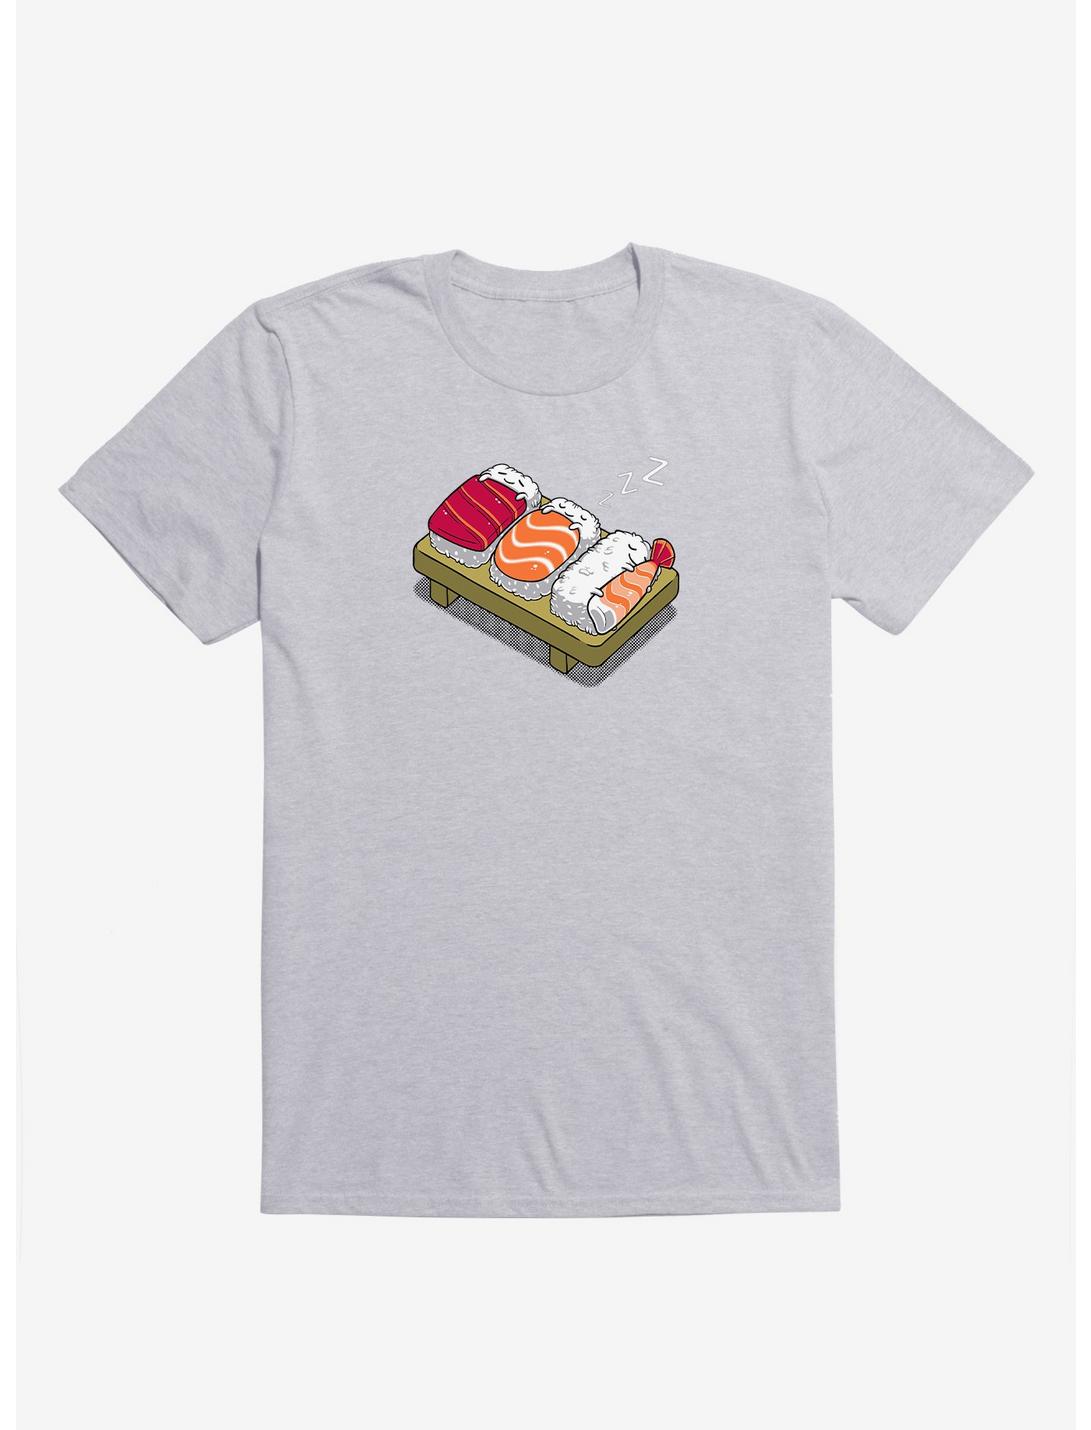 Sleeping Sushi Sport Grey T-Shirt, SPORT GRAY, hi-res